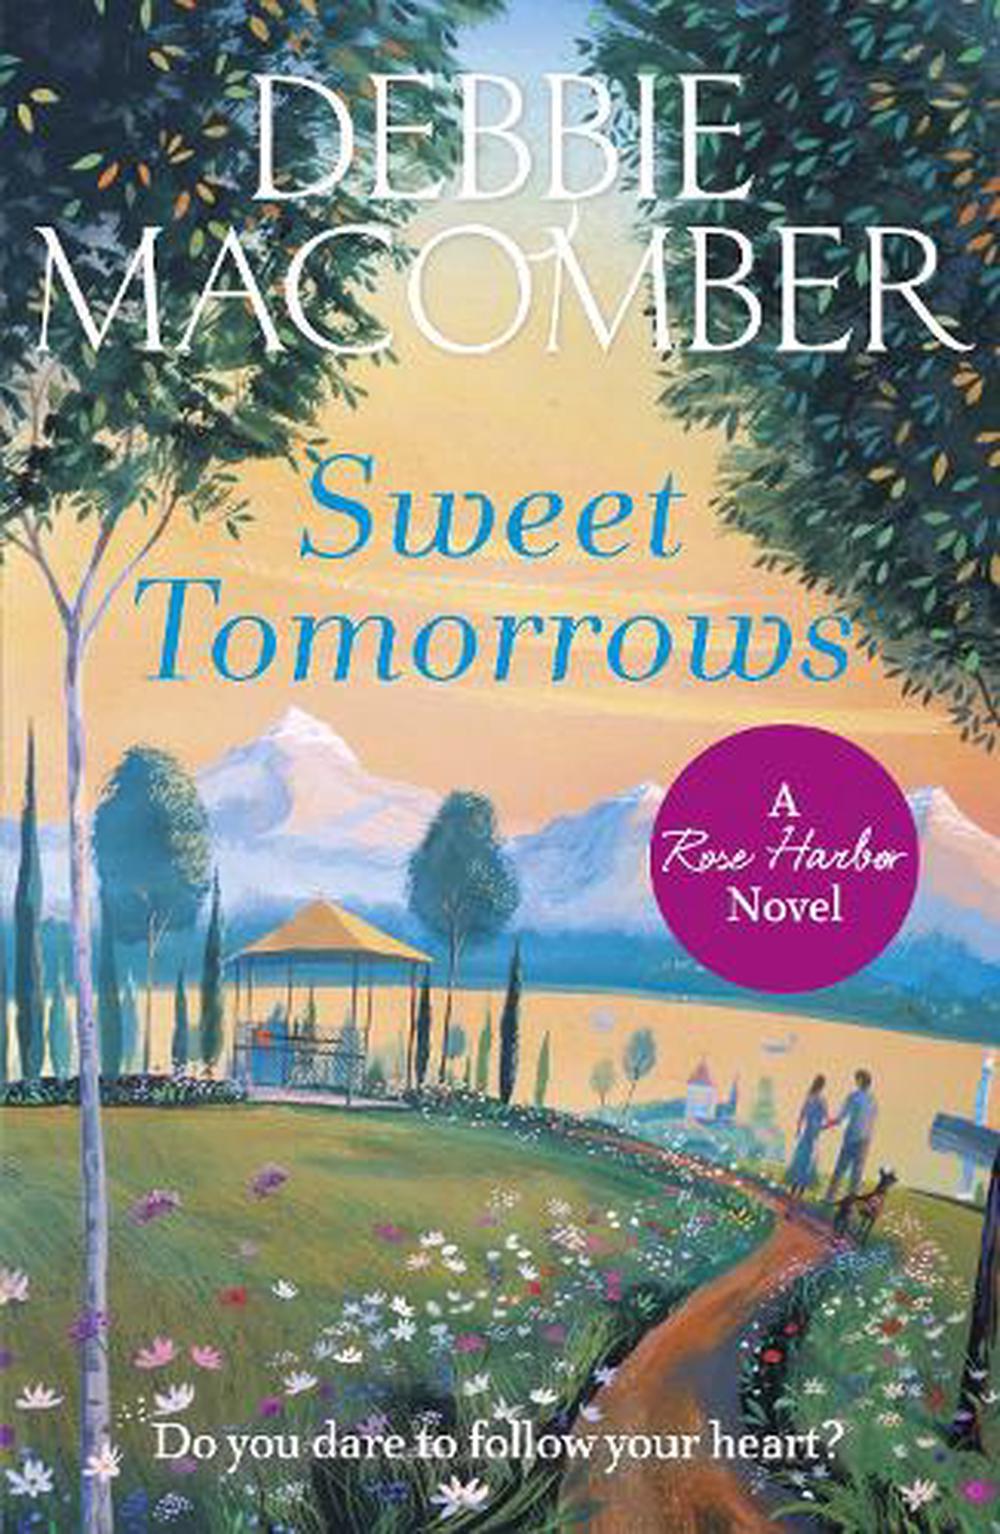 sweet tomorrows by debbie macomber